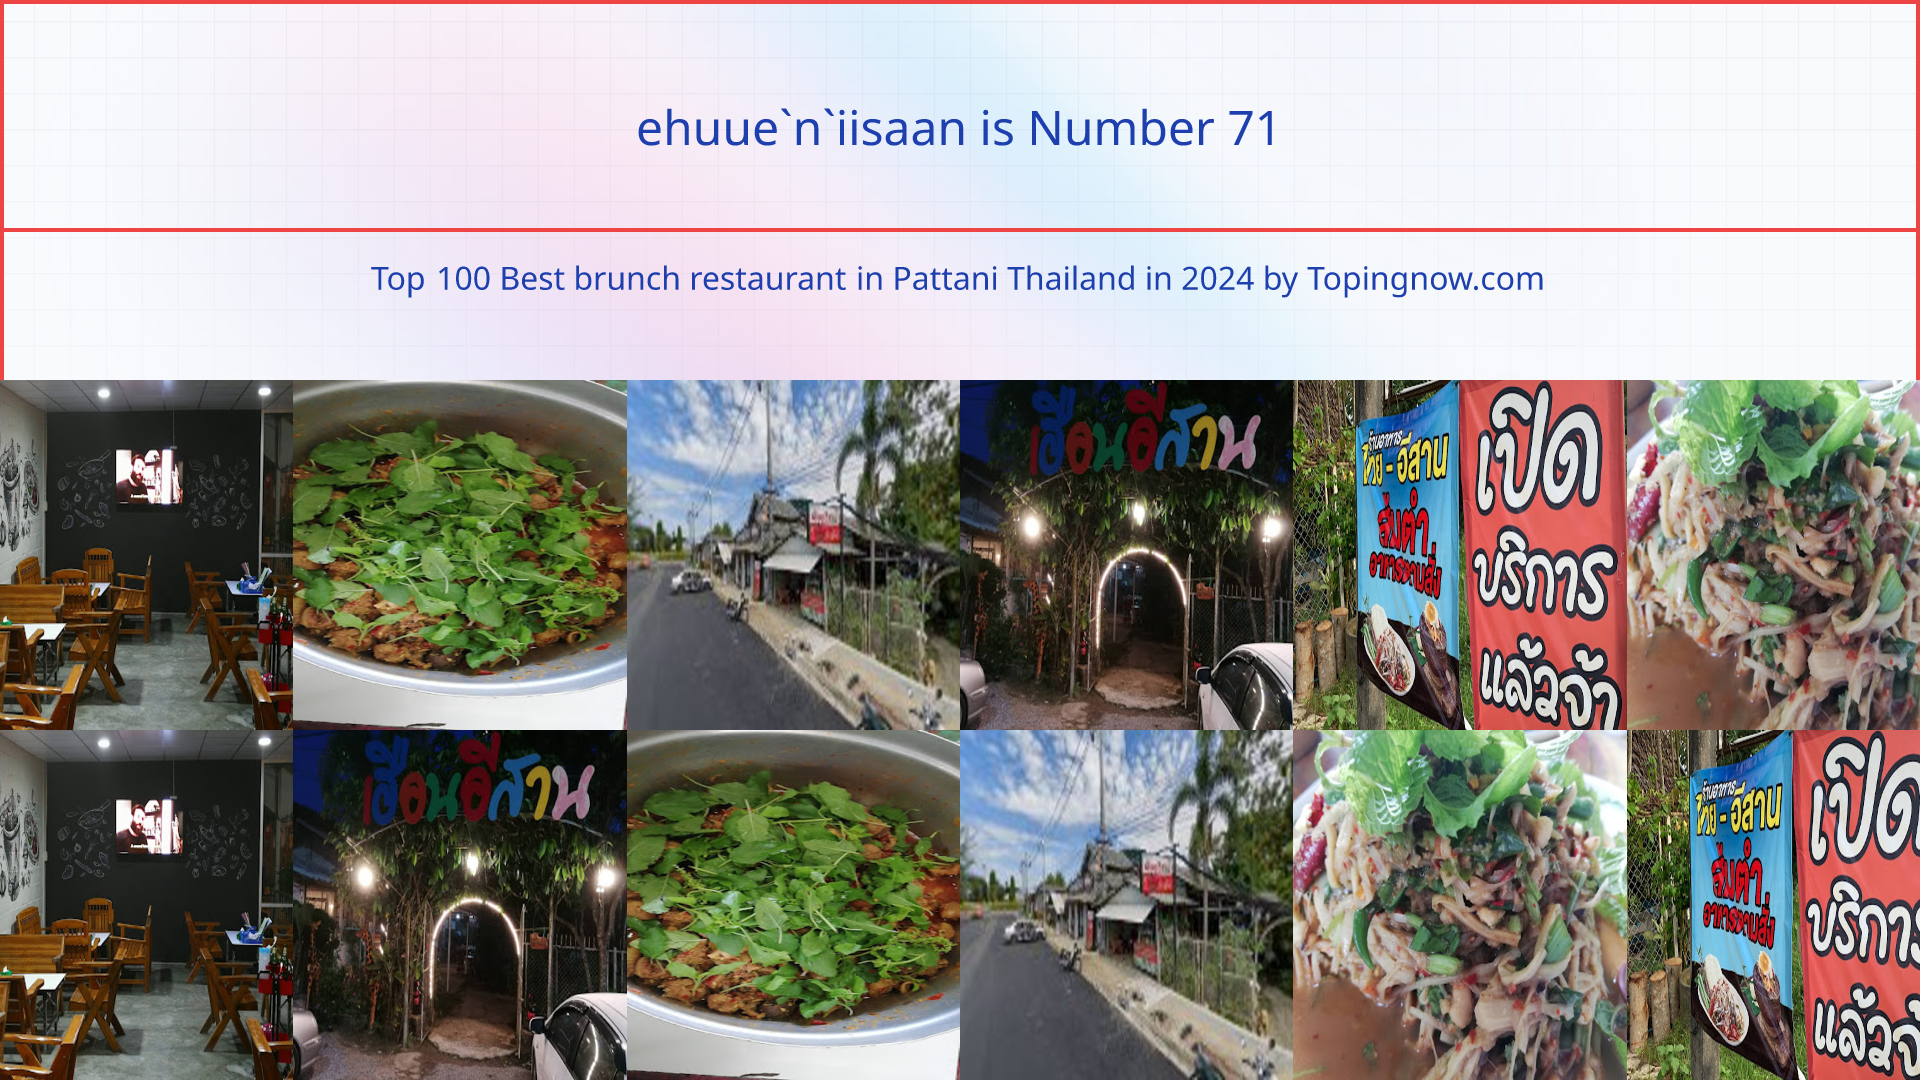 ehuue`n`iisaan: Top 100 Best brunch restaurant in Pattani Thailand in 2024